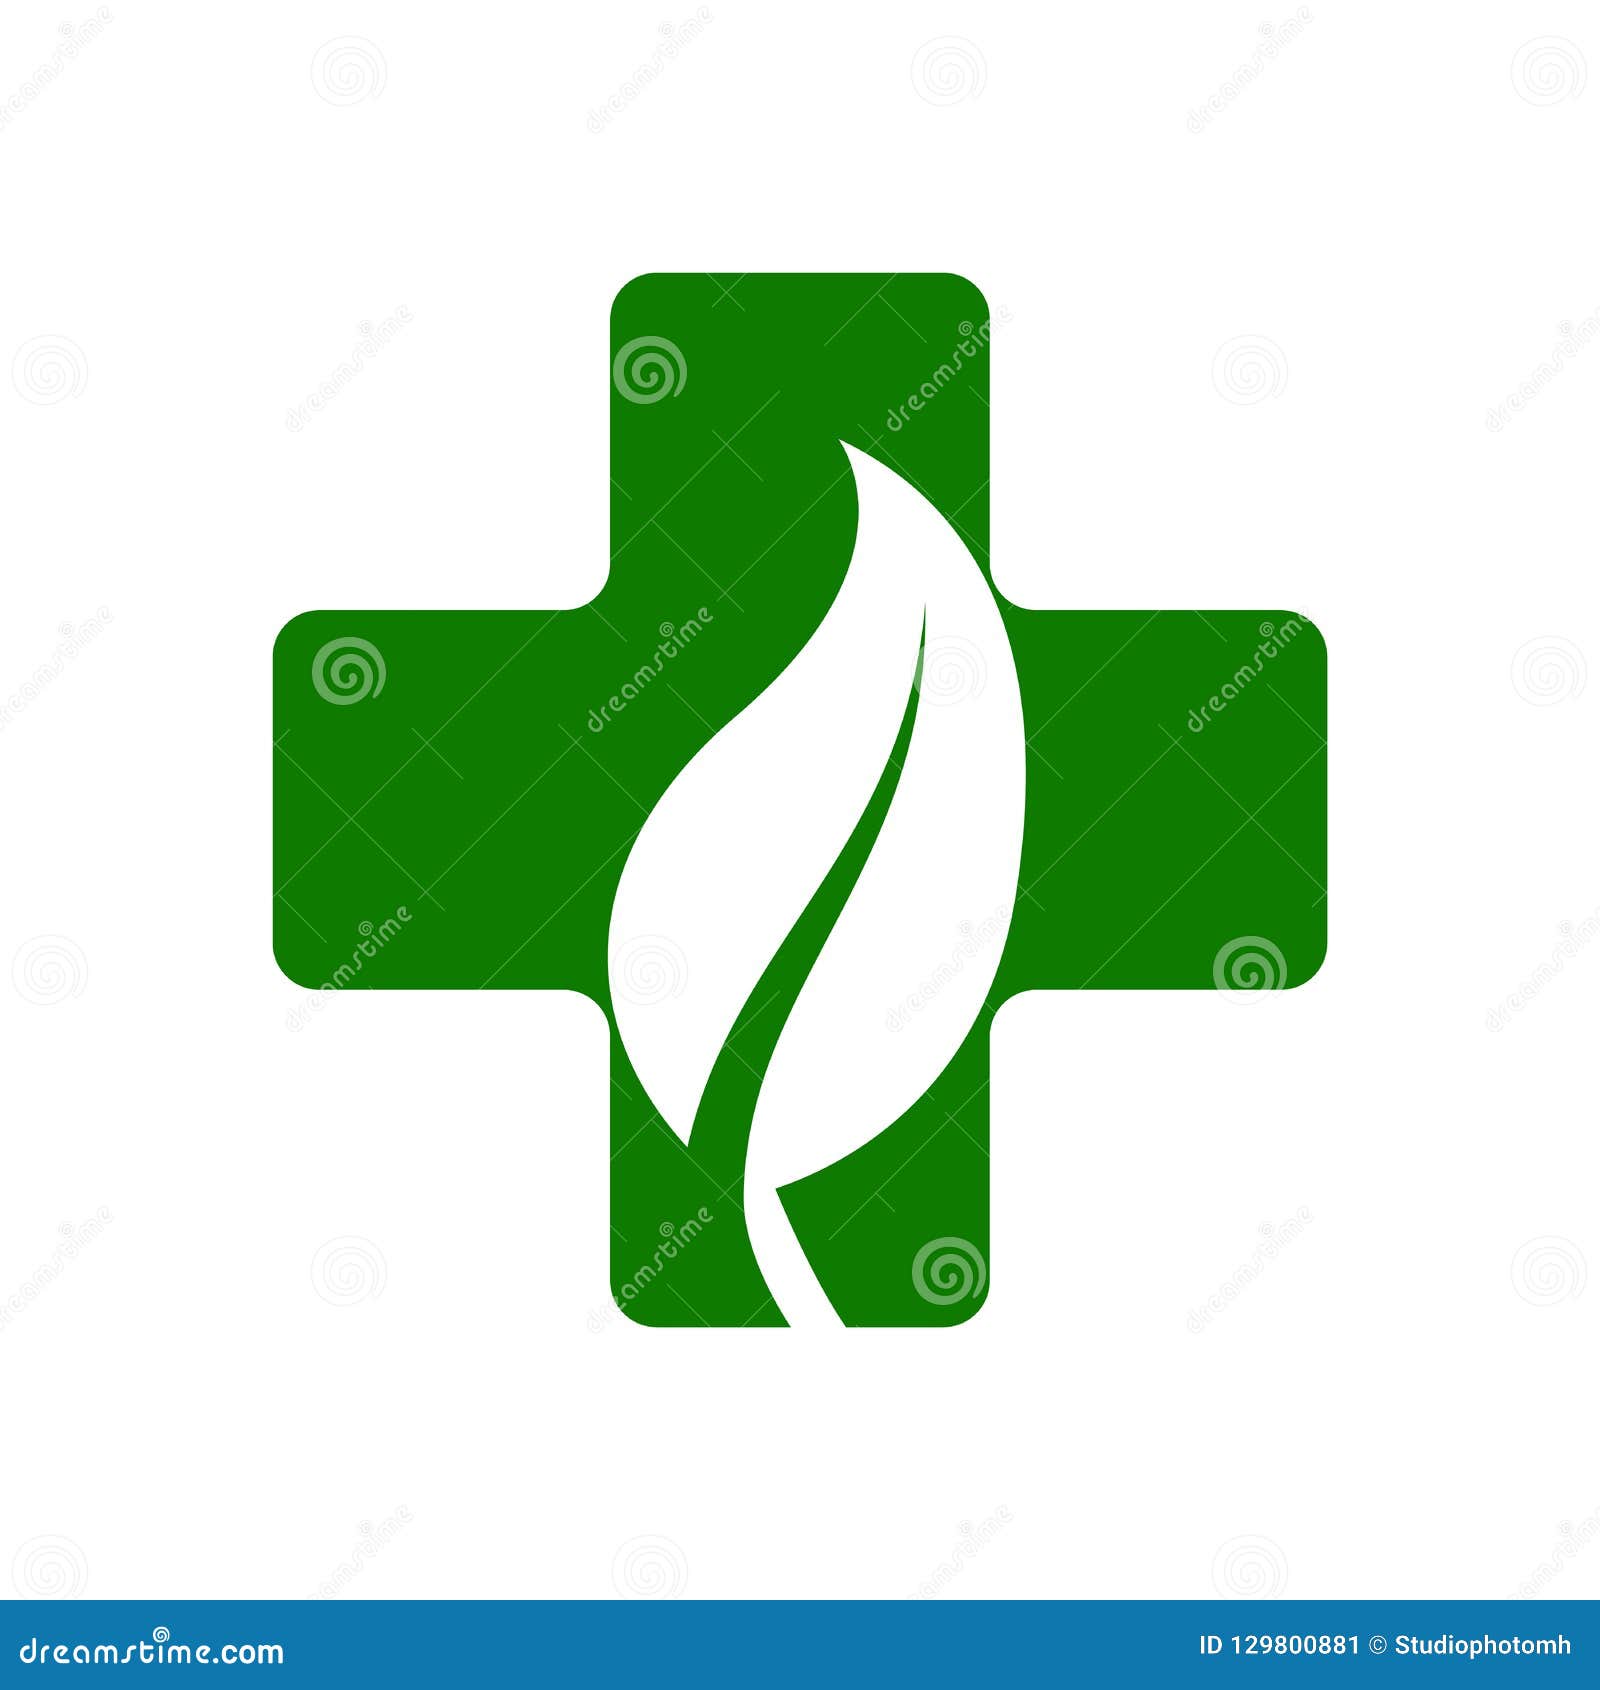 Premium Vector | Creative health care concept logo template. cross plus  medical logo icon template elements